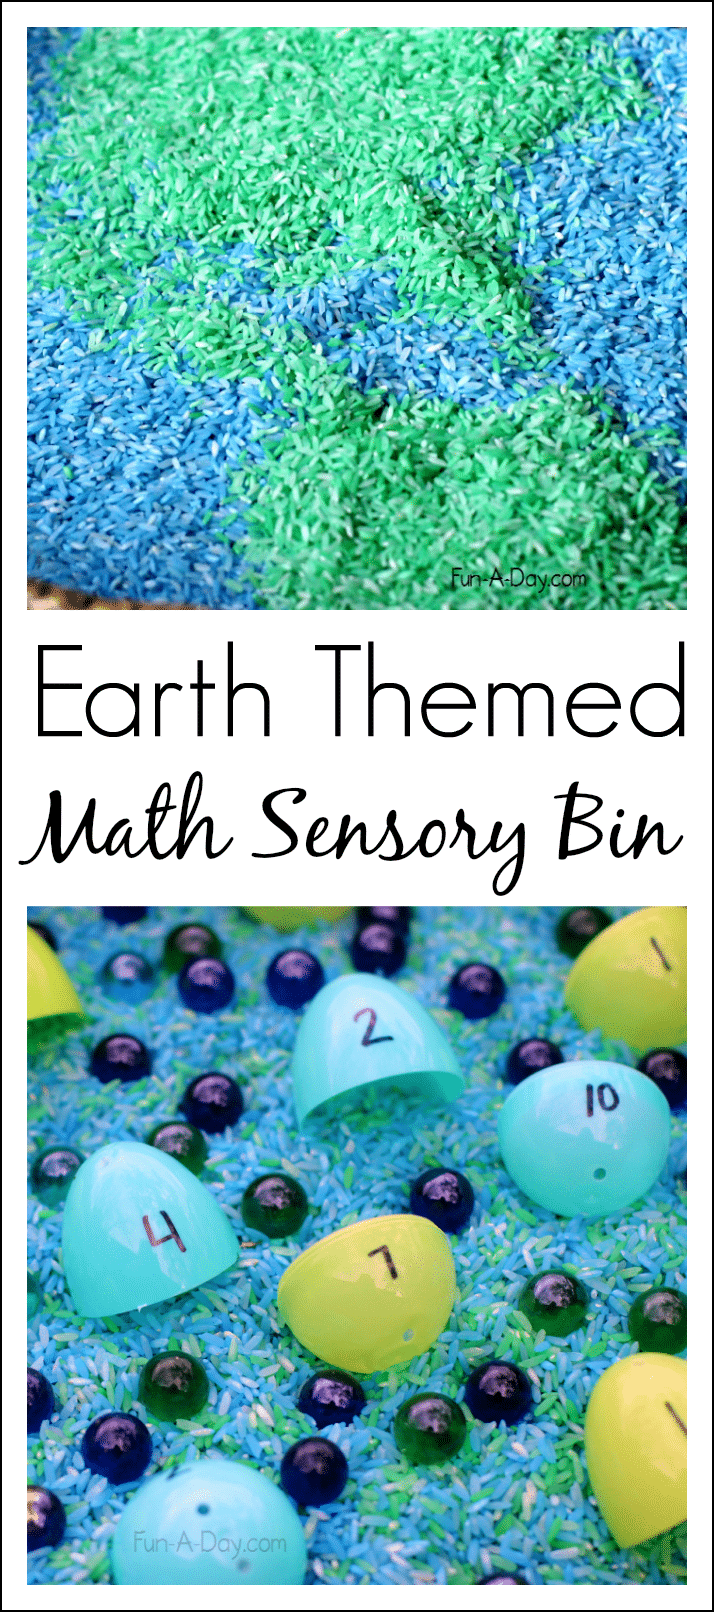 Earth Day math sensory bin - great for teaching kindergarten and preschool math skills in a hands-on way